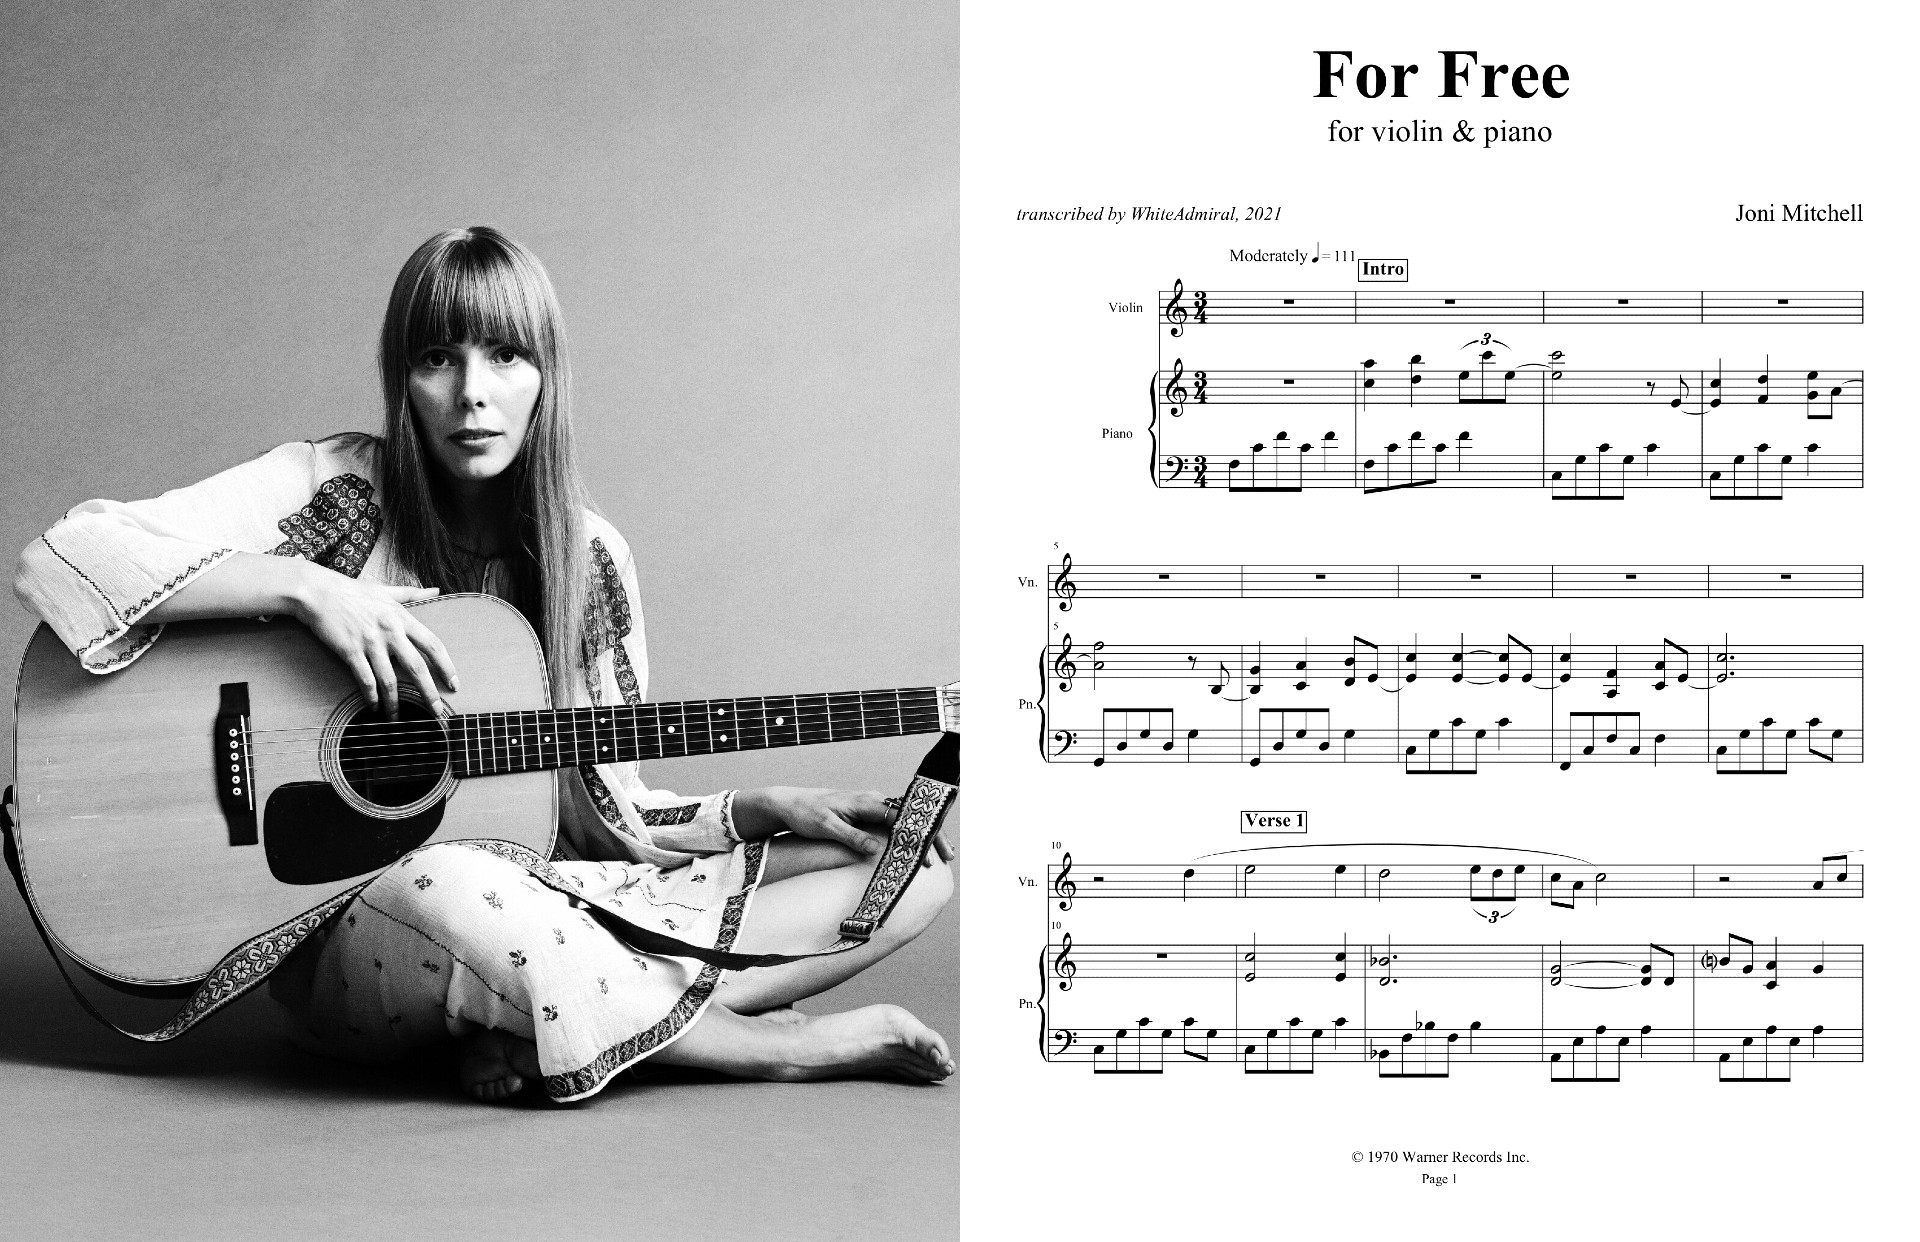 Joni Mitchell - For Free (violin & piano).jpg